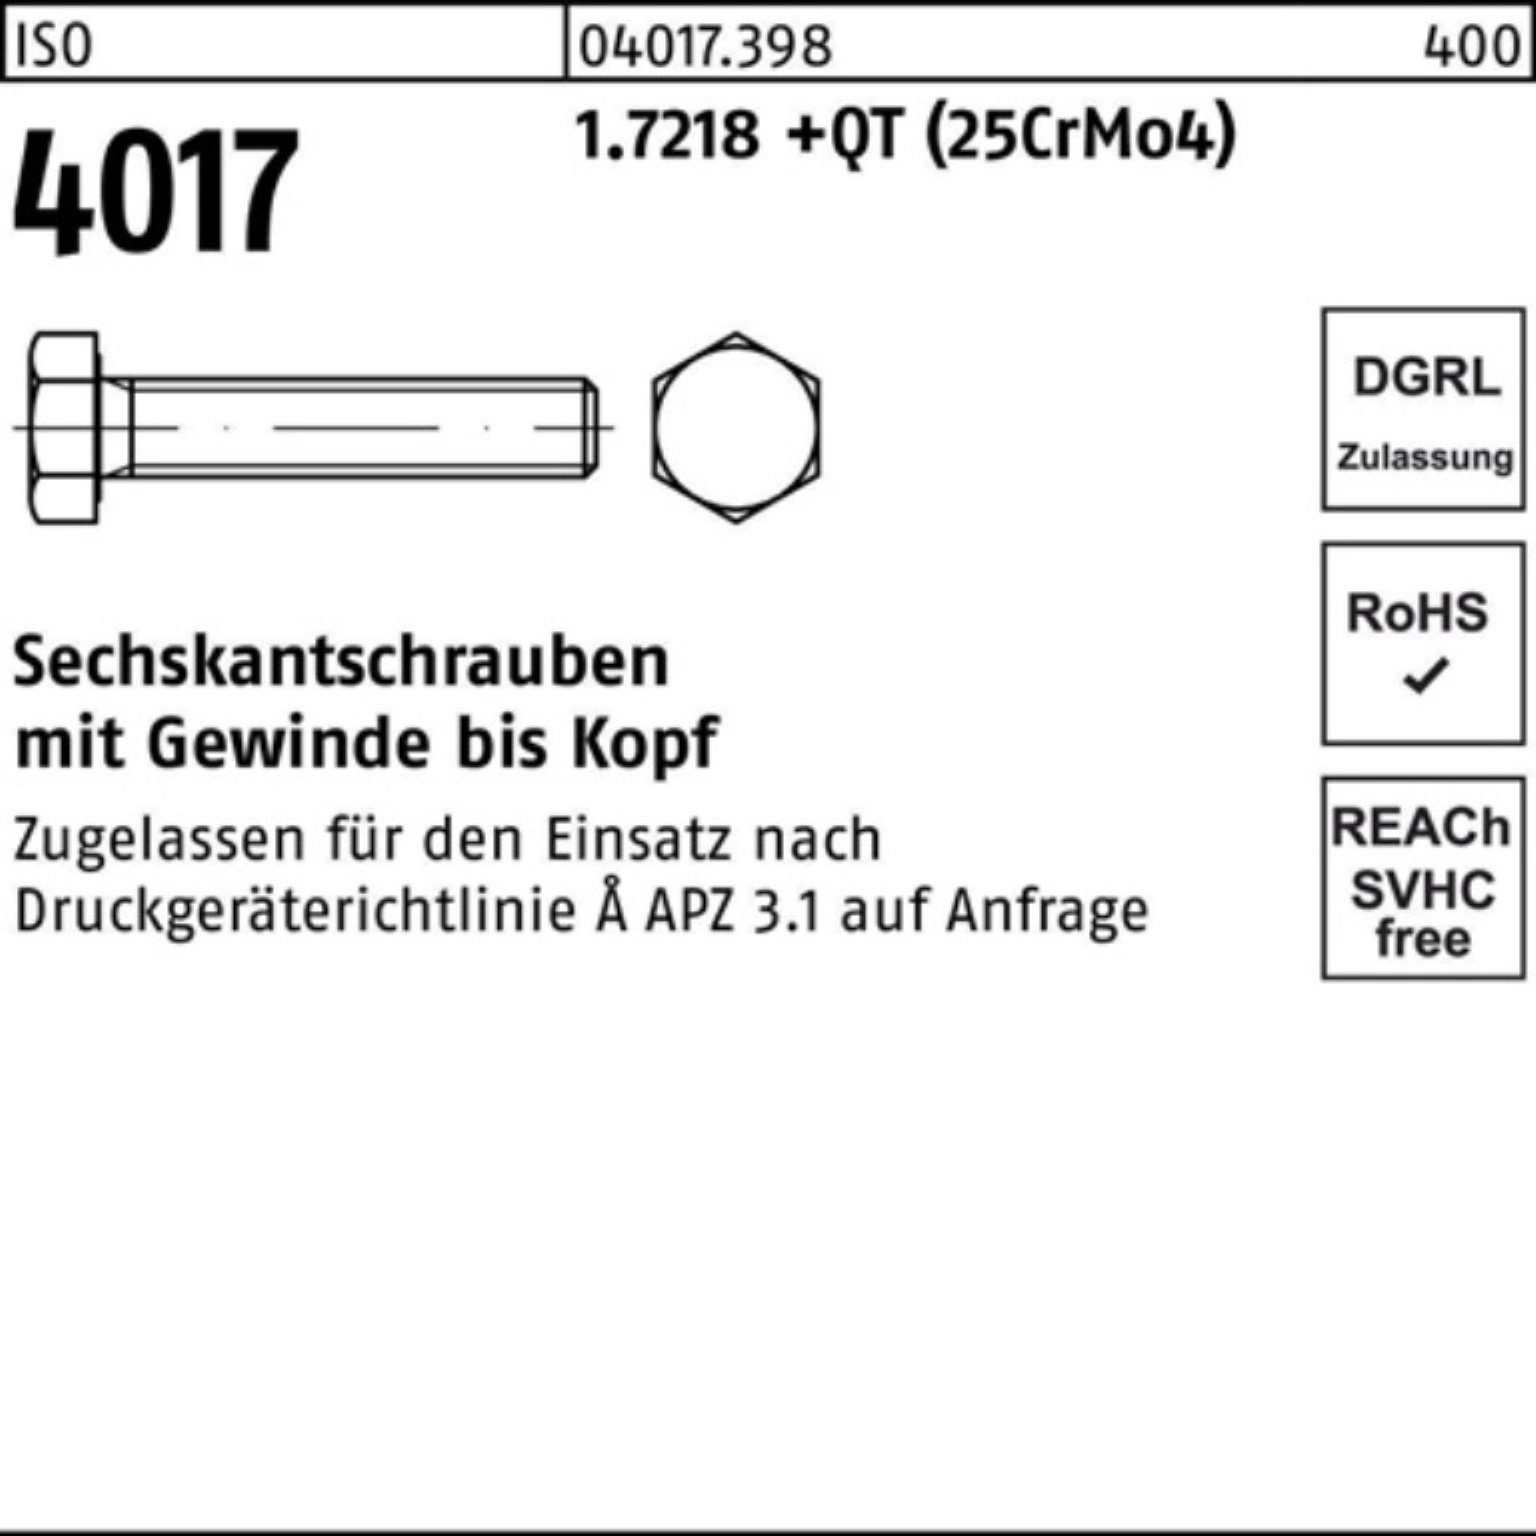 Bufab Sechskantschraube Pack +QT (25CrMo4) 4017 Sechskantschraube 1.7218 110 100er M33x VG ISO